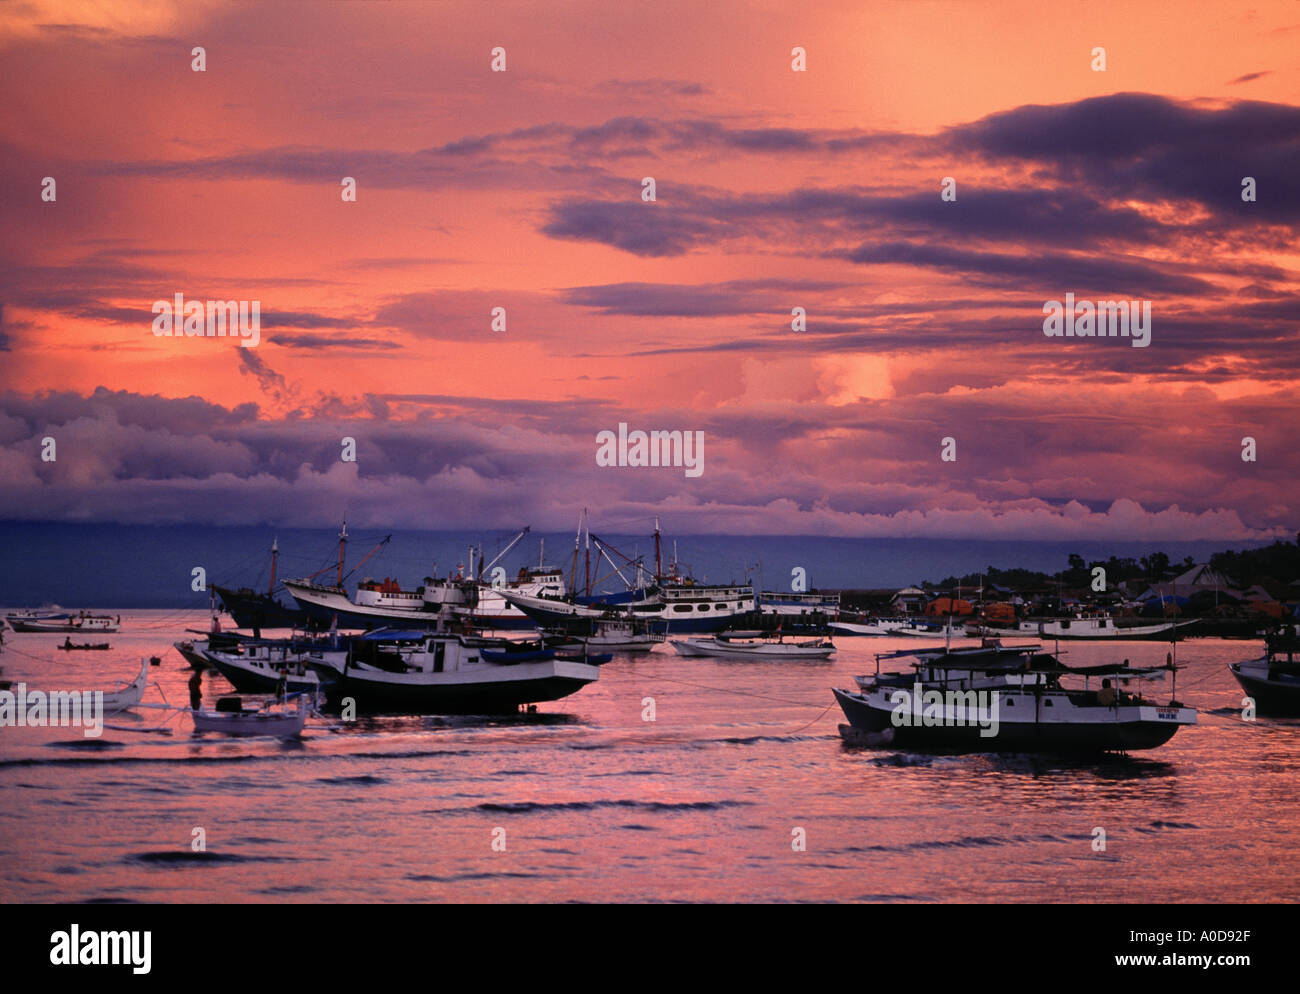 Indonesien, Sulawesi, Donggala, Hafen, Boote, Sonnenuntergang Stockfoto